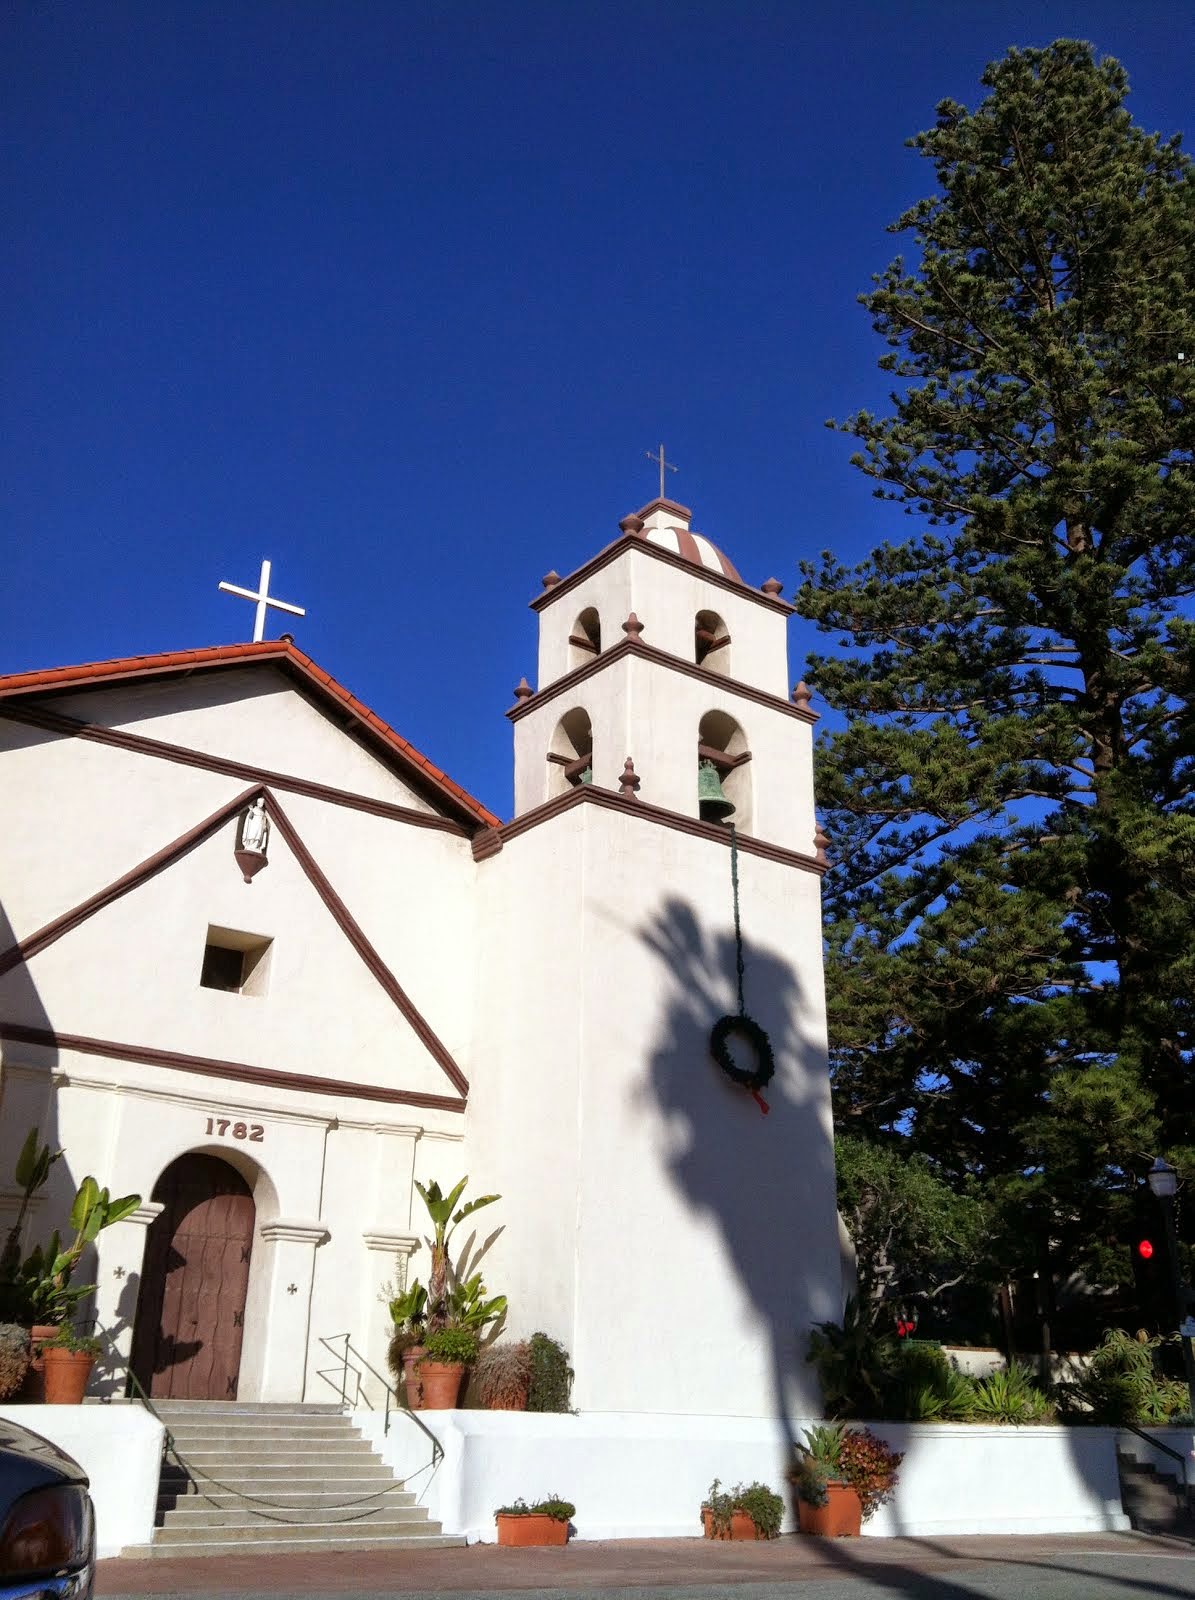 The Mission San Buenaventura